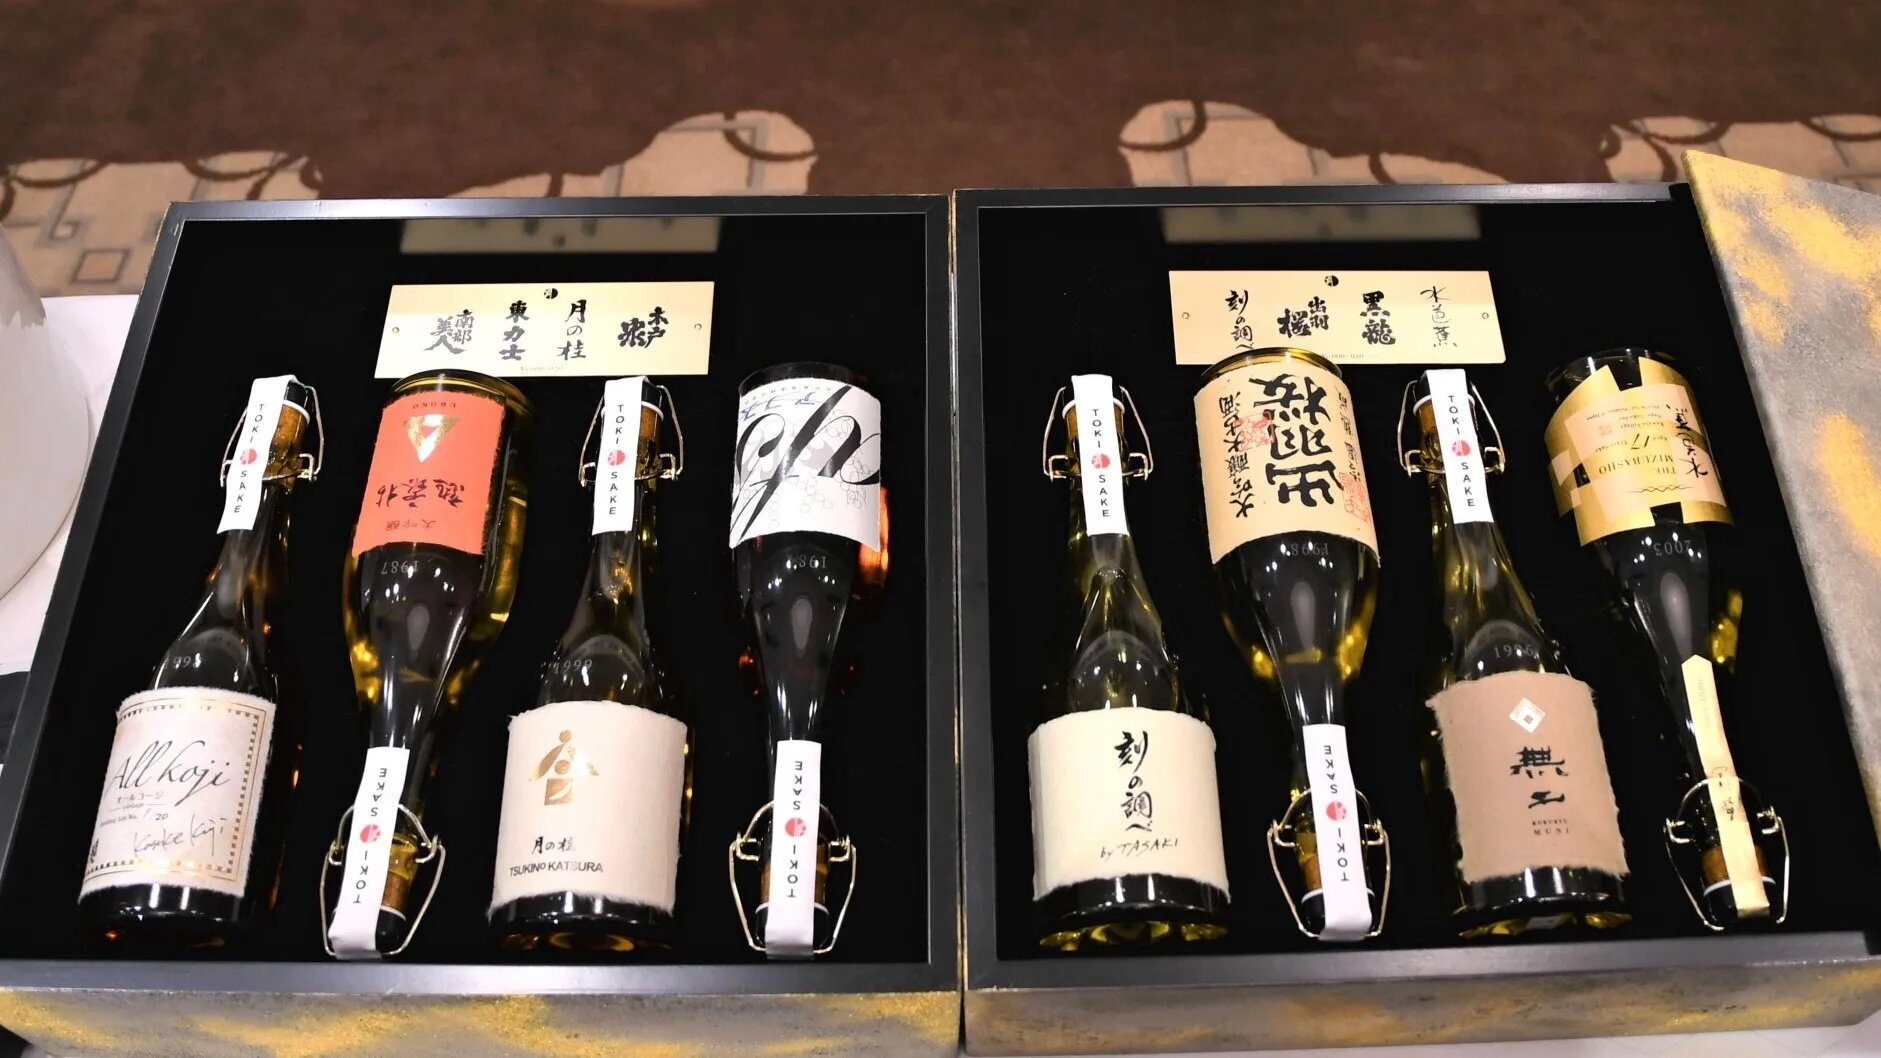 Japanese brewers define metrics for labeling 'vintage' sake